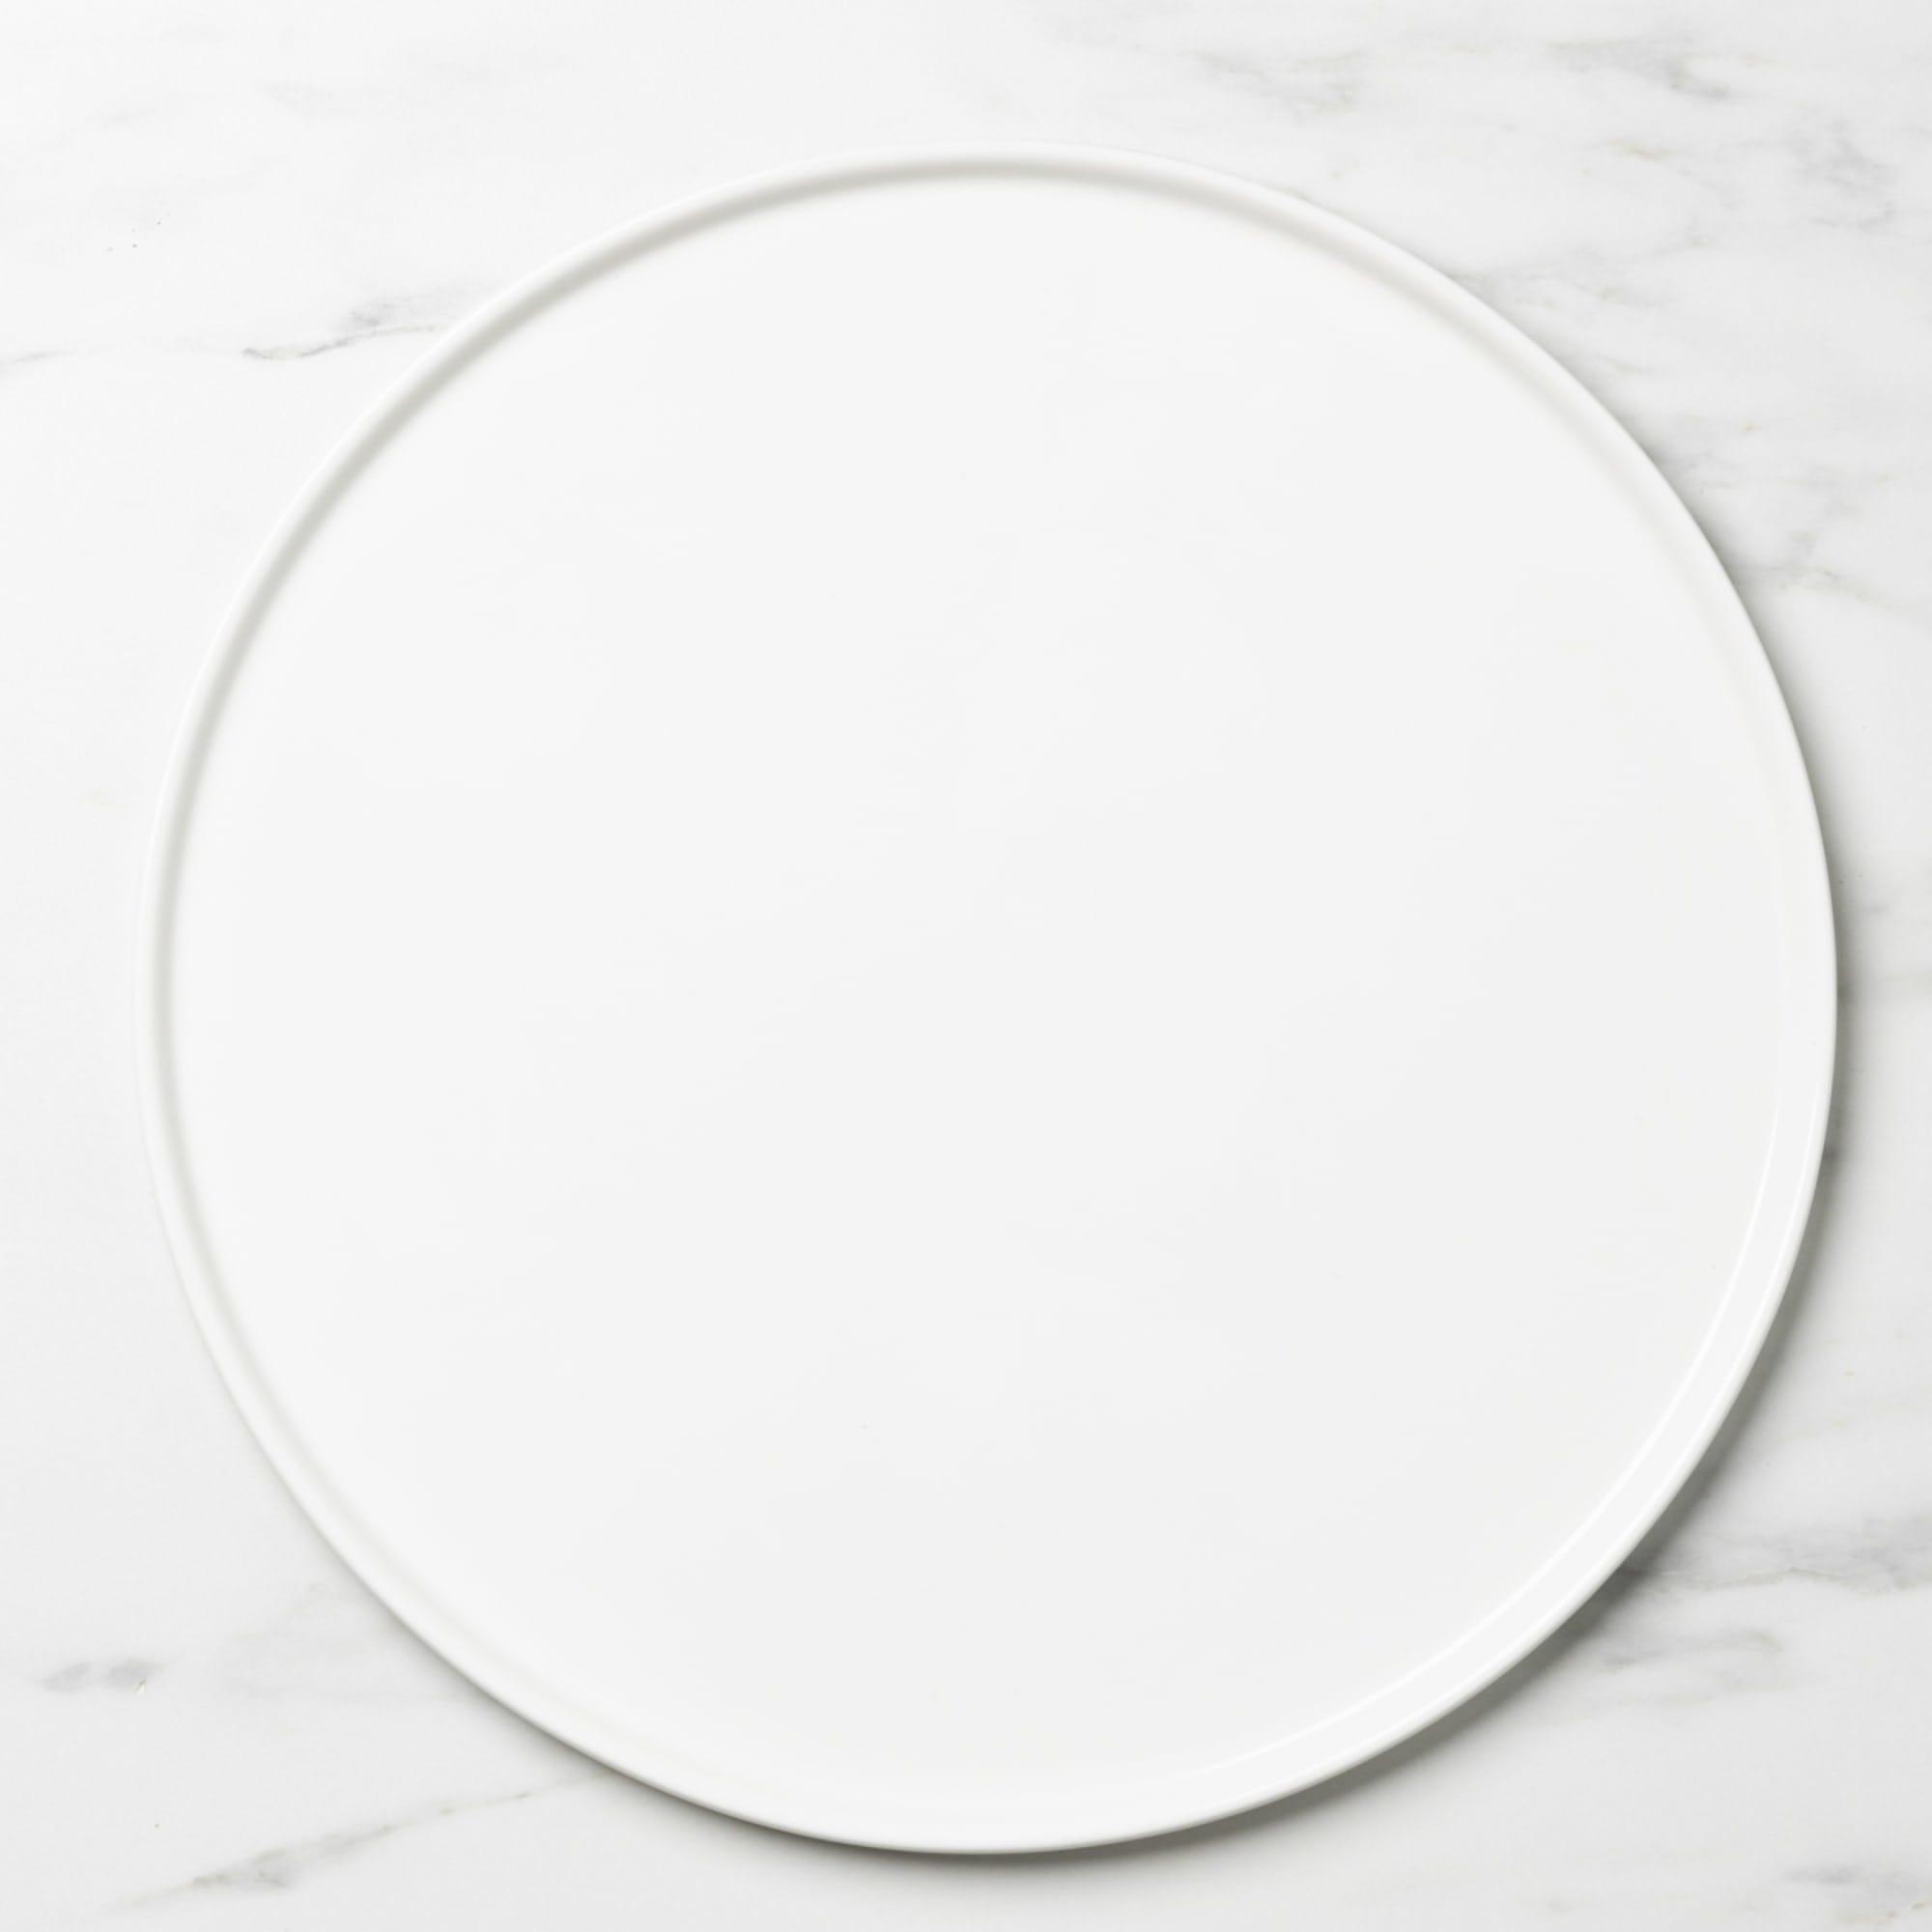 Salisbury & Co Classic Round Platter 36cm White Image 1